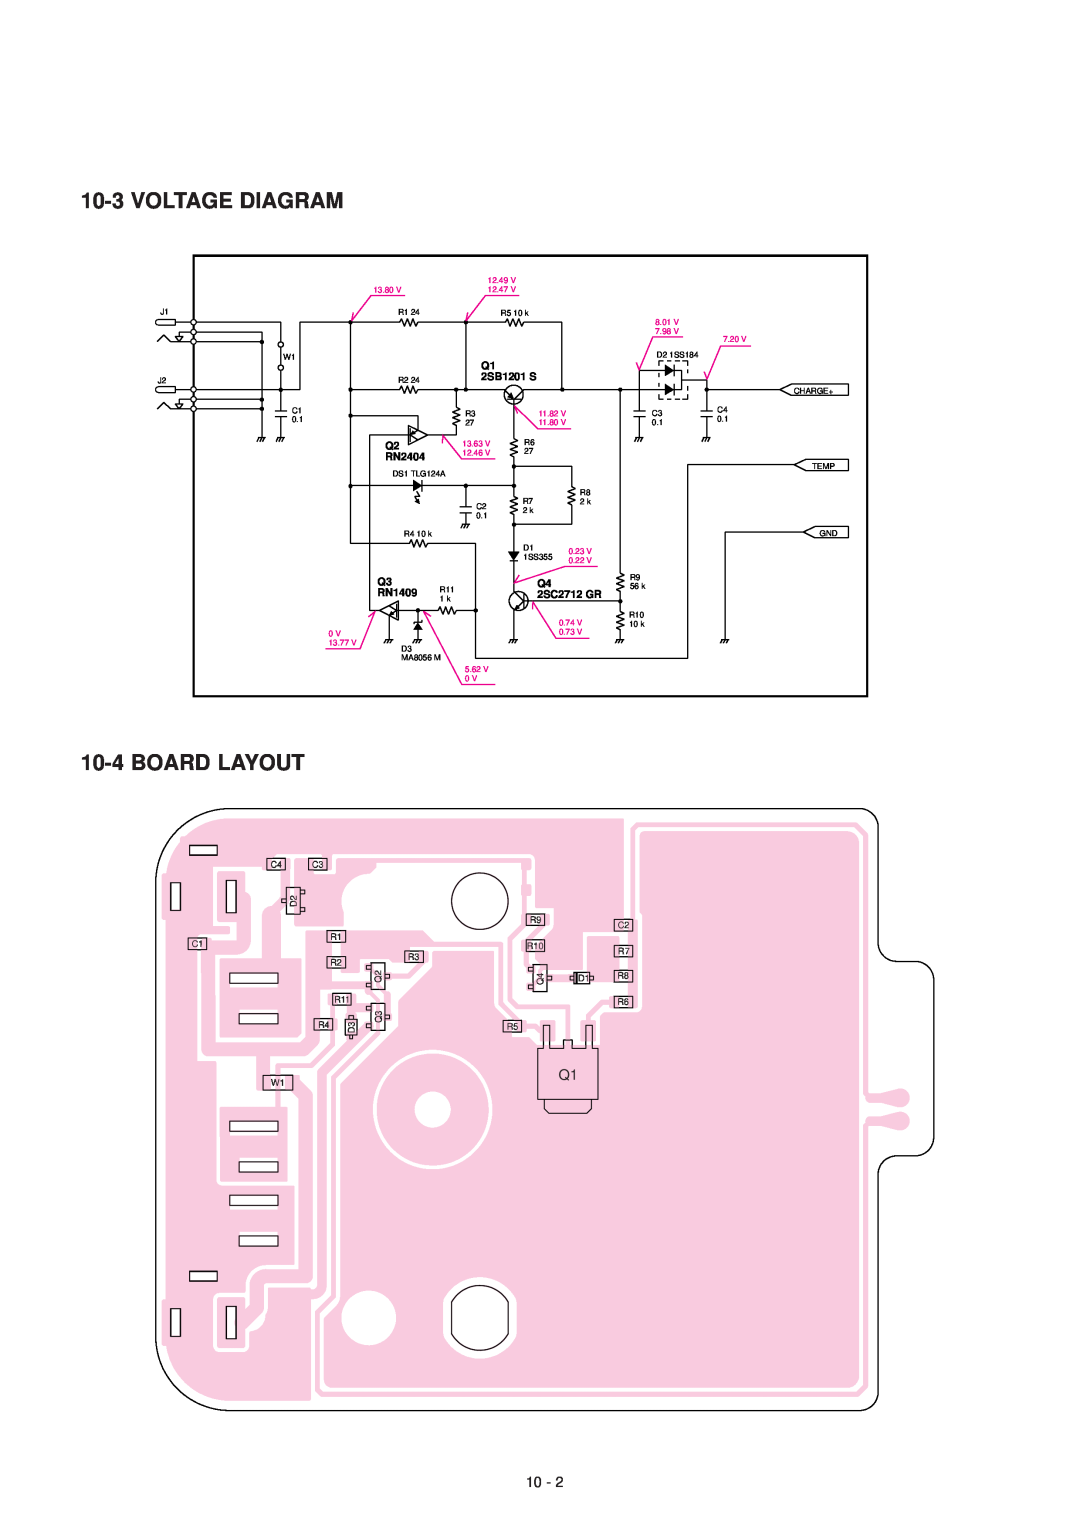 Icom IC-F3GT, IC-F3GS service manual Voltage Diagram, Board Layout, 2SB1201 S, RN2404, RN1409, 2SC2712 GR 